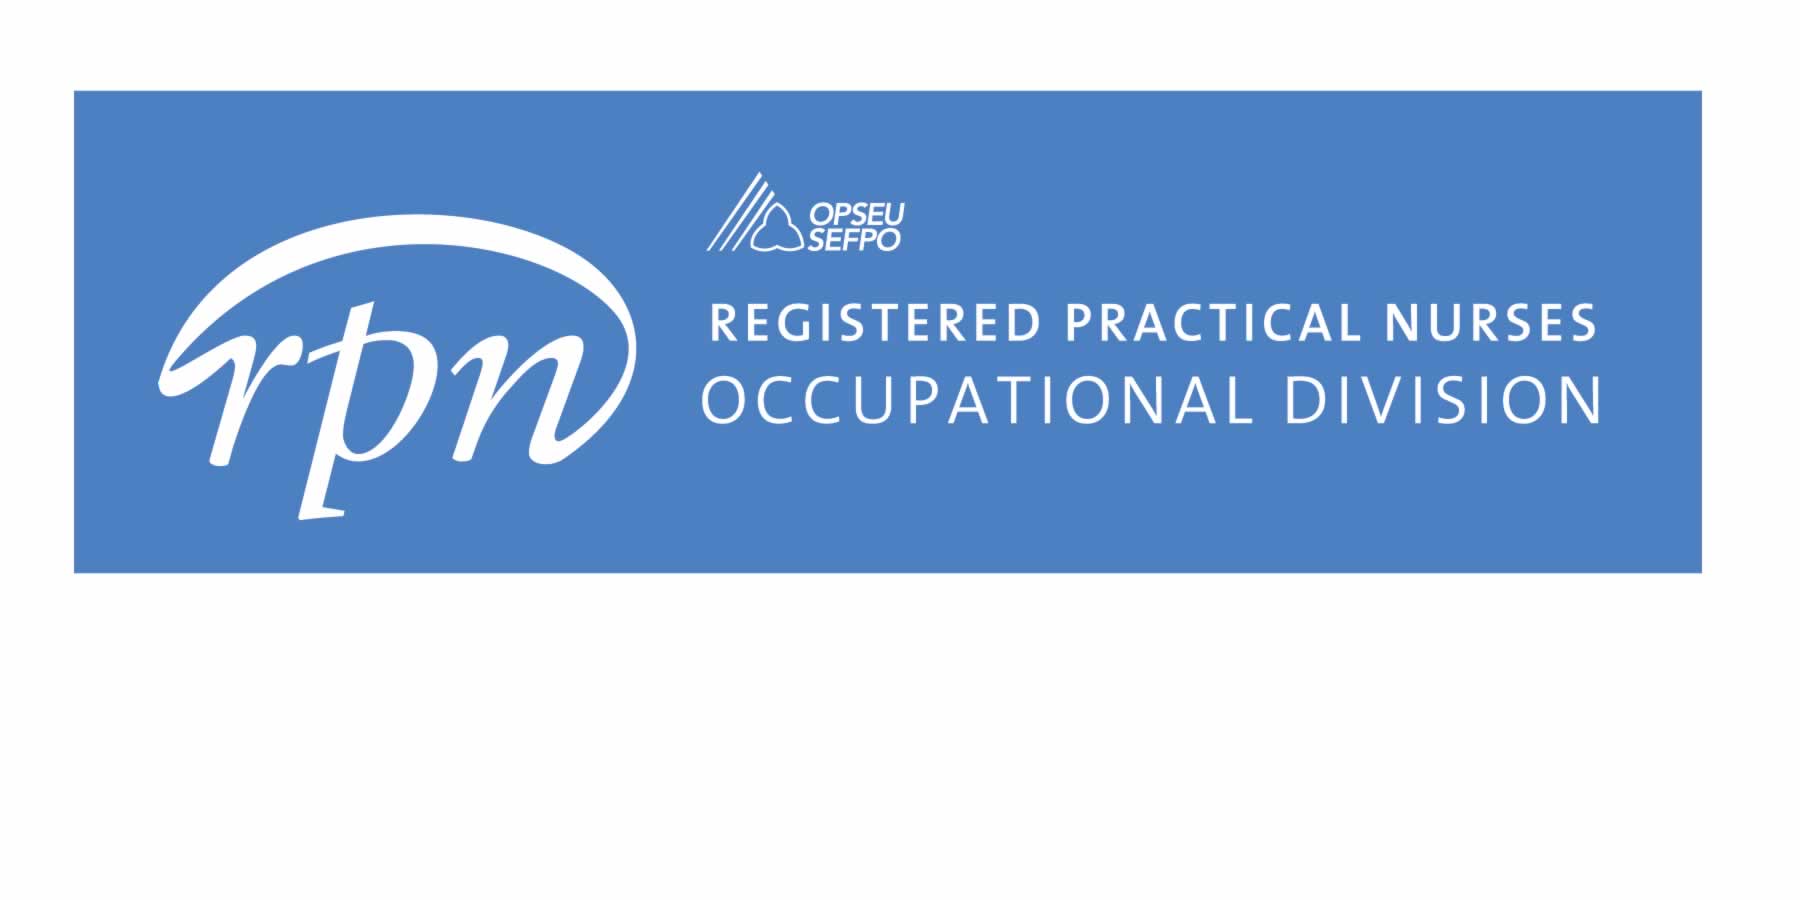 Registered practical nurses occupational division